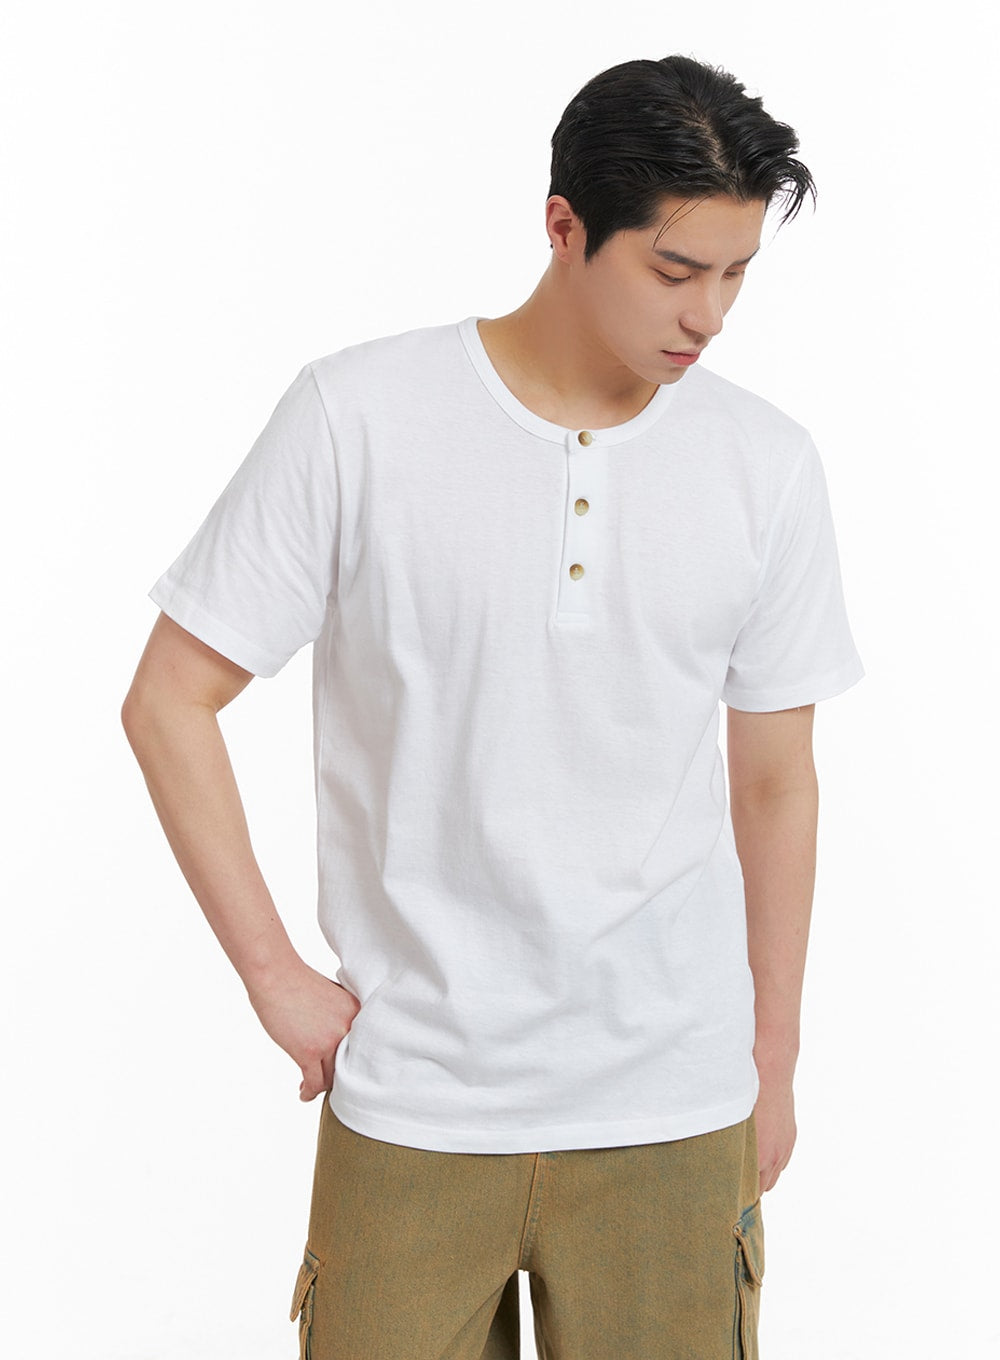 mens-quarter-button-up-cotton-t-shirt-ia401 / White